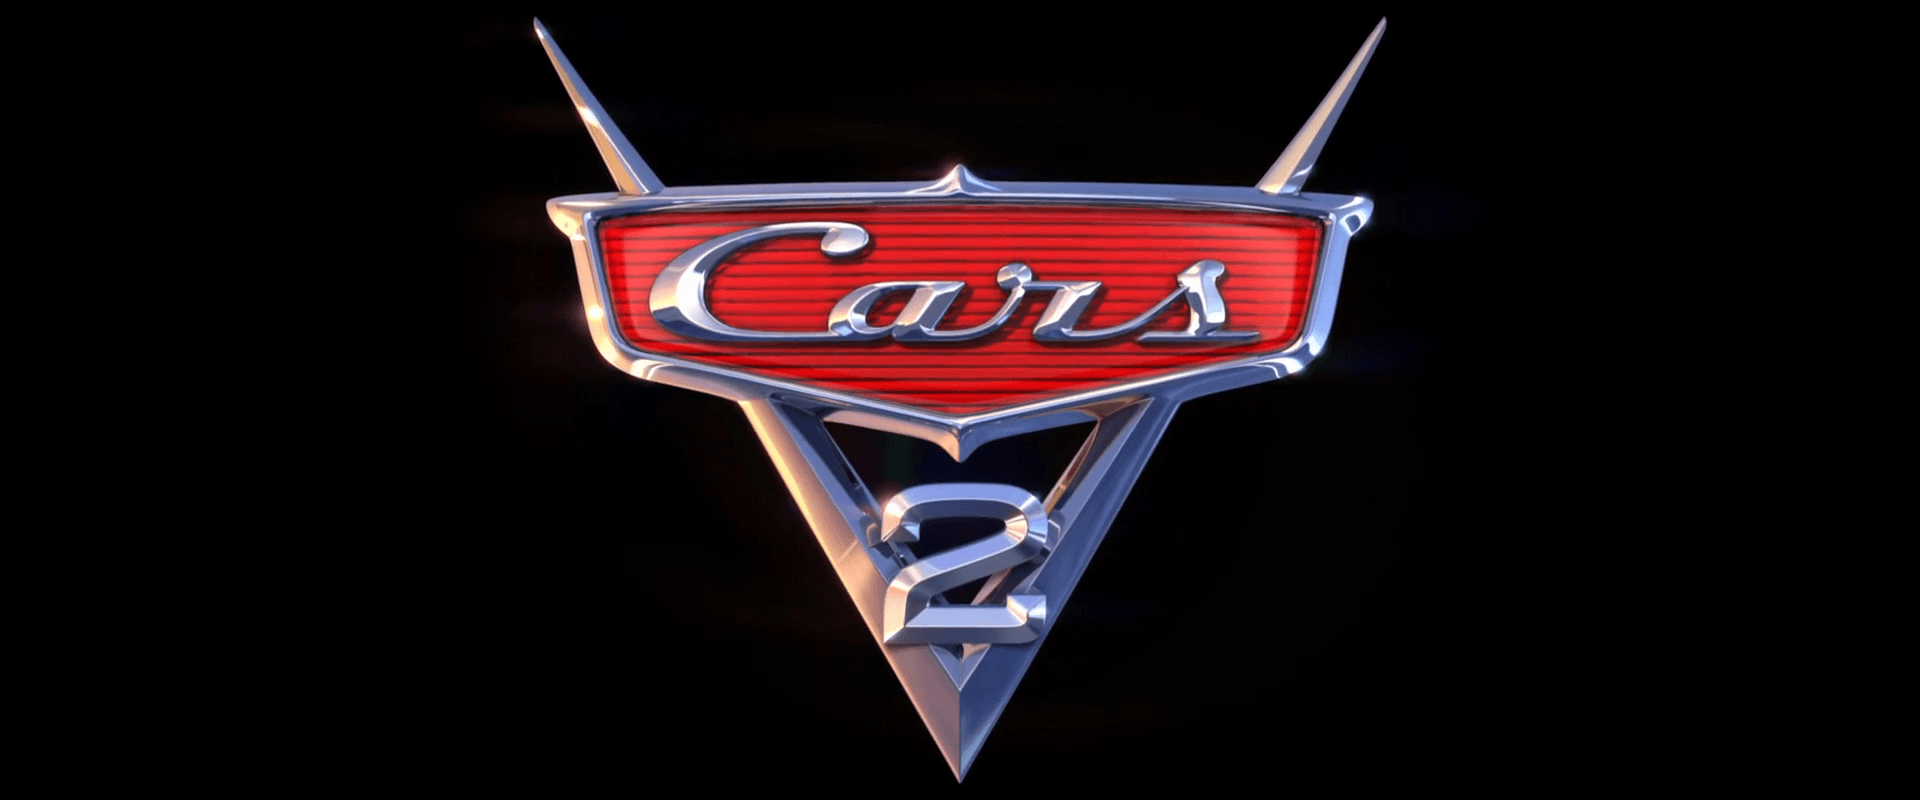 Cars 2 Logo - Cars 2 logo png » PNG Image